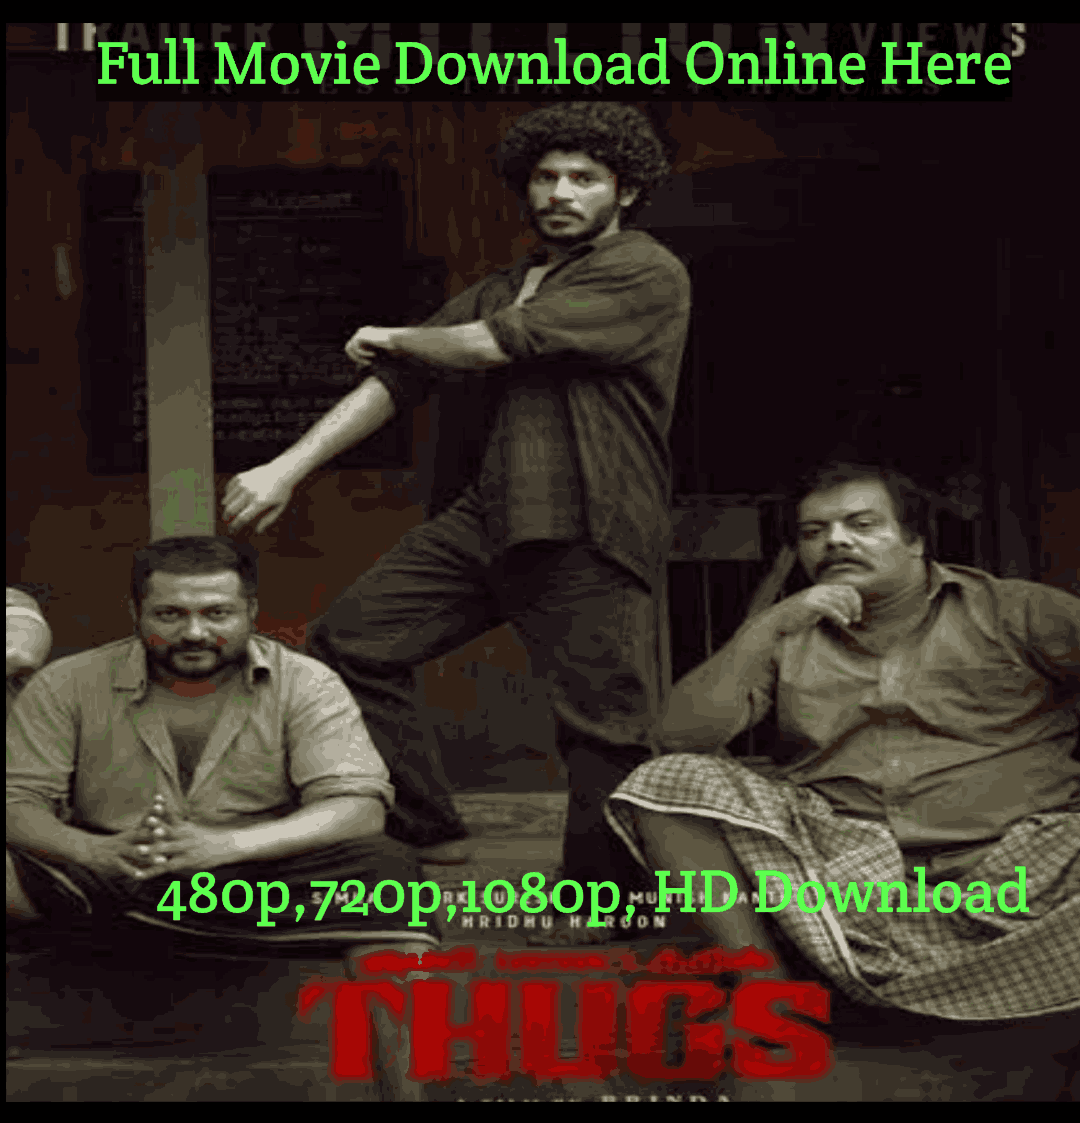 Thugs Tamil Movie Download Hindi Dubbed Free HD [480p,720p,1080p]